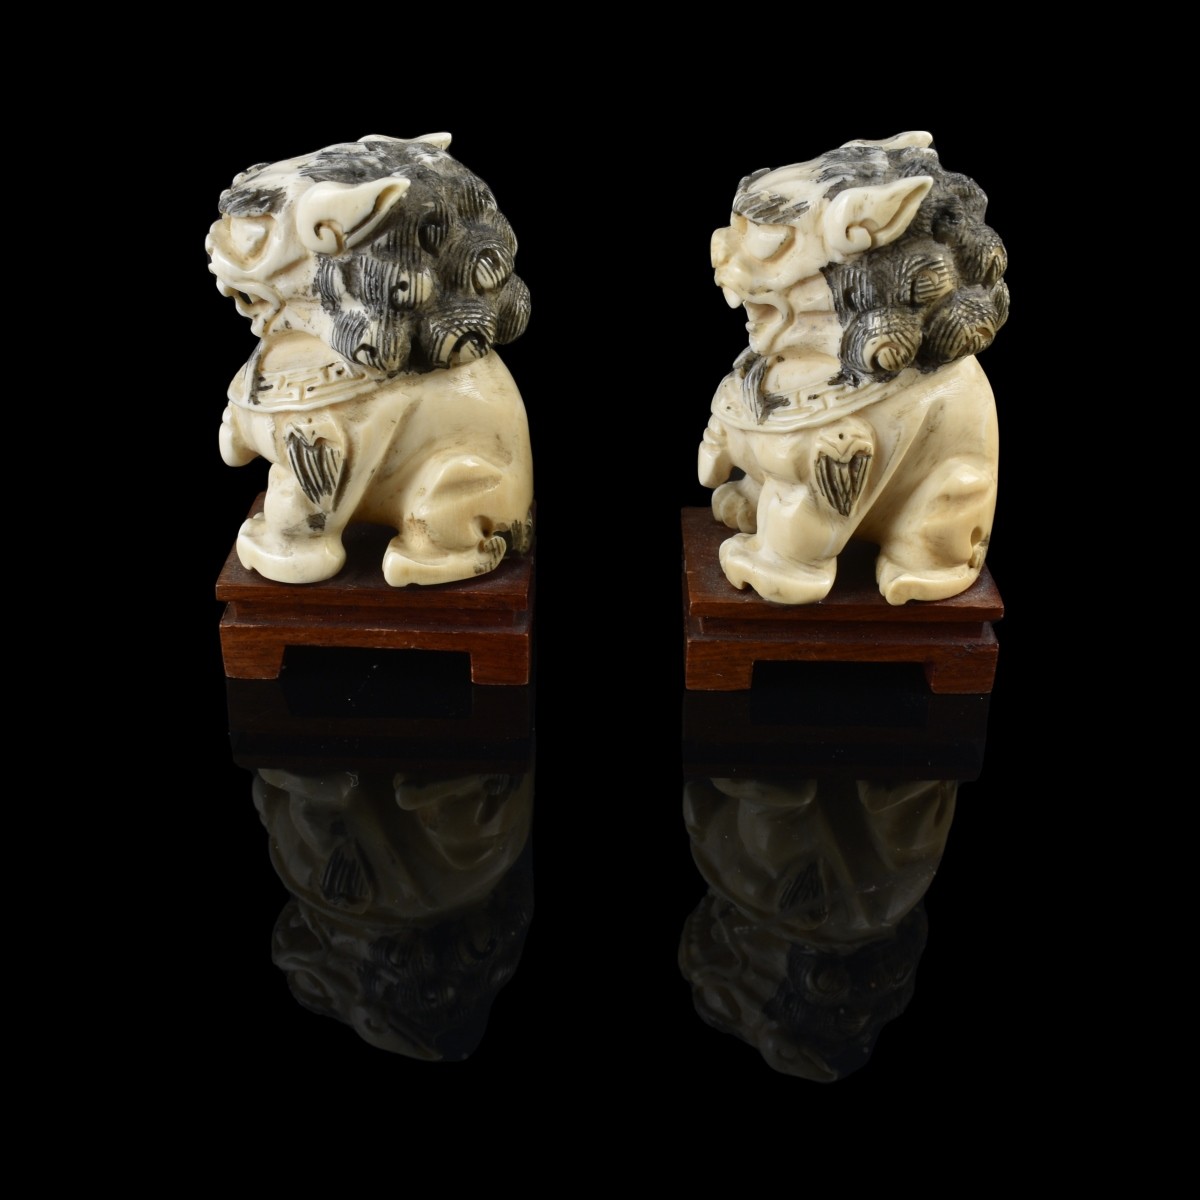 Pair of Chinese Miniature Figurines